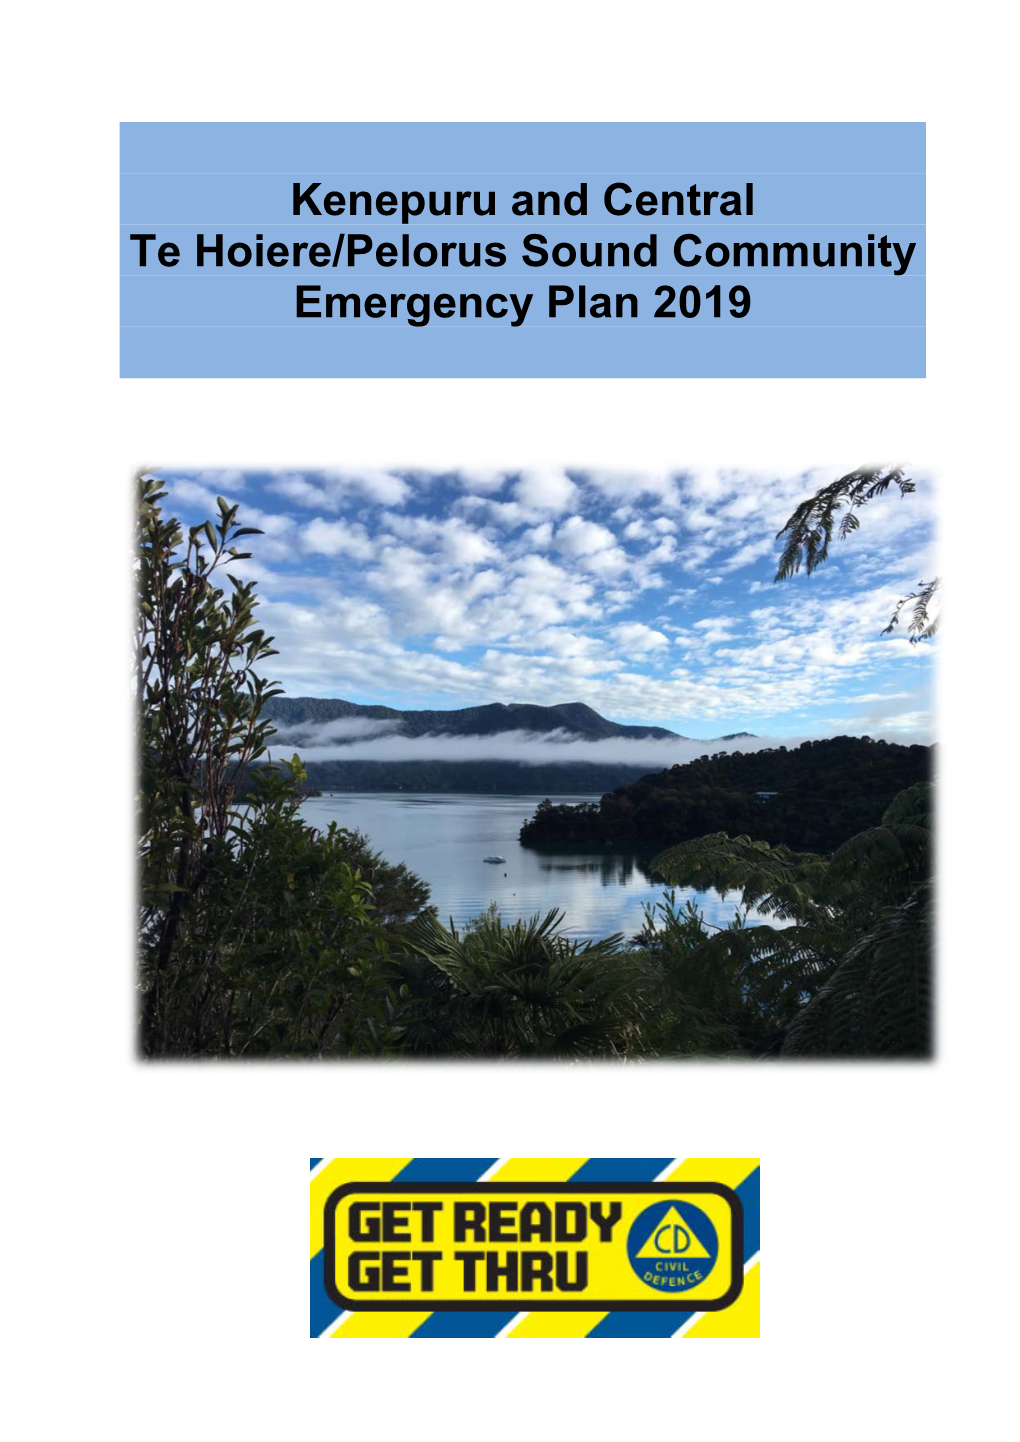 Kenepuru and Central Te Hoiere/Sounds Plan 2019